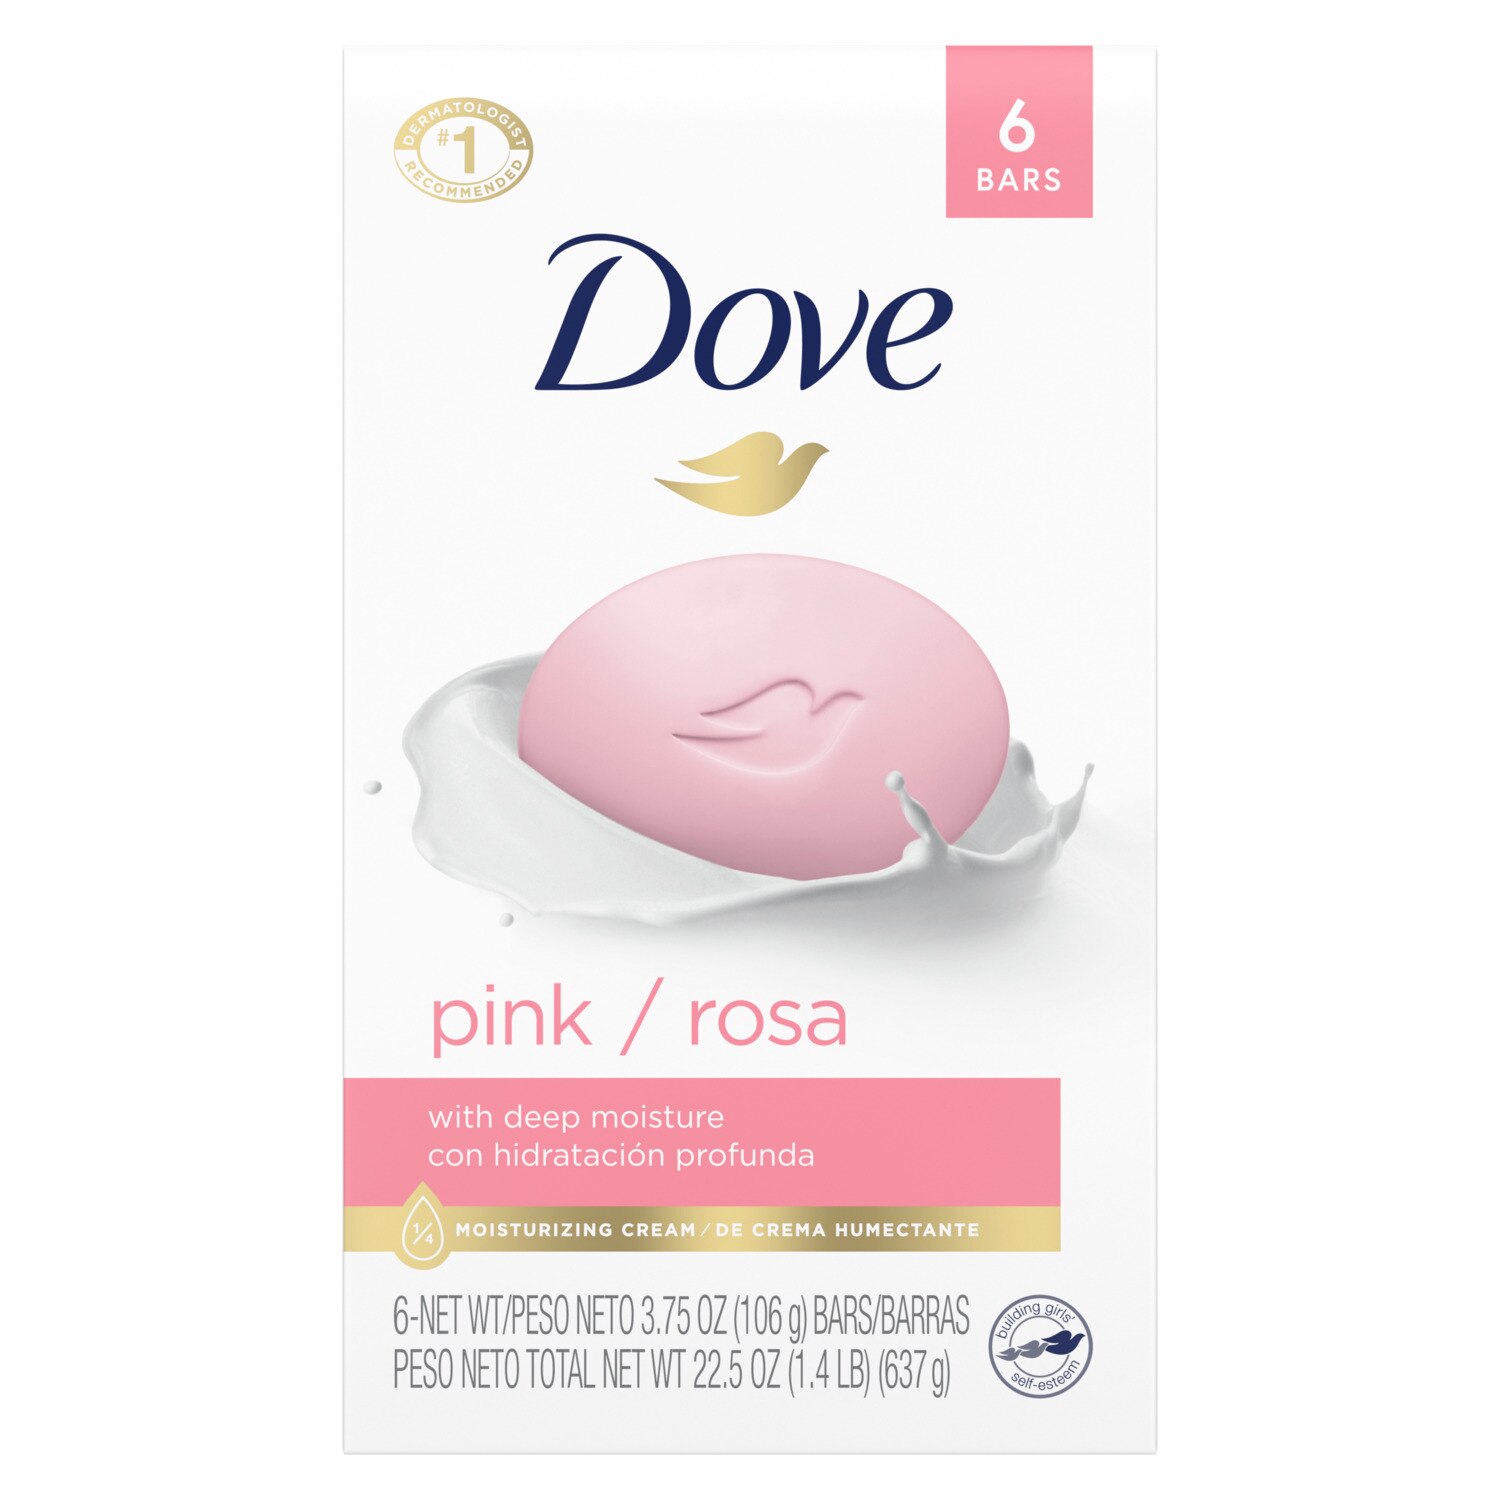 Dove More Moisturizing Than Bar Soap Pink Beauty Bar For Softer Skin, 3.75 OZ, 6 Bars , CVS